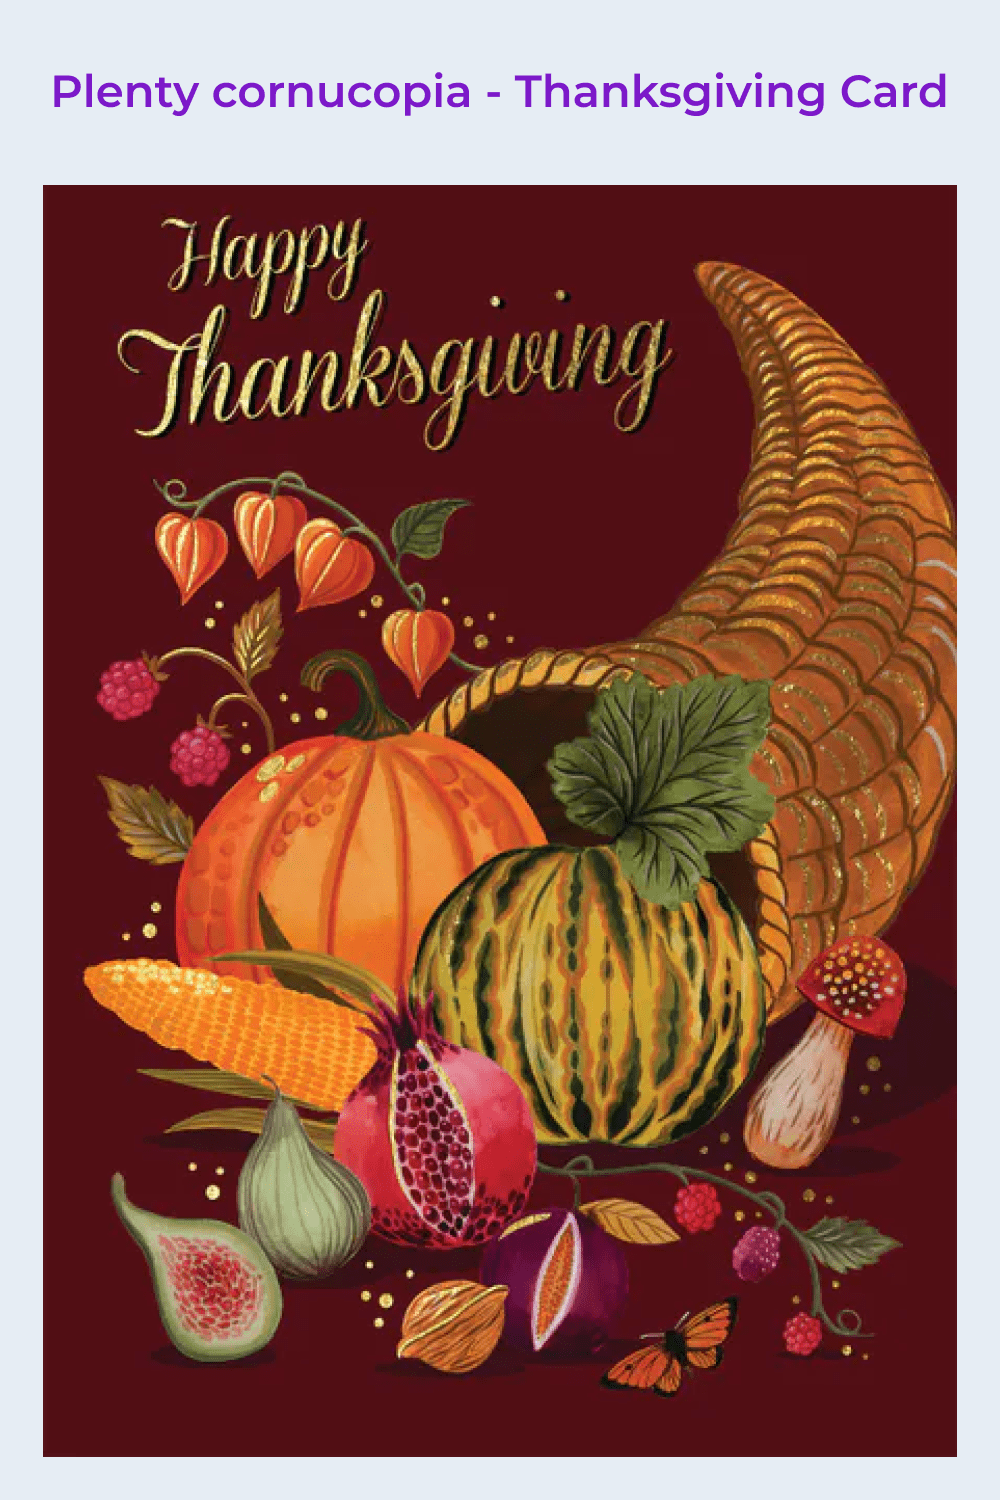 Plenty cornucopia - Thanksgiving card.